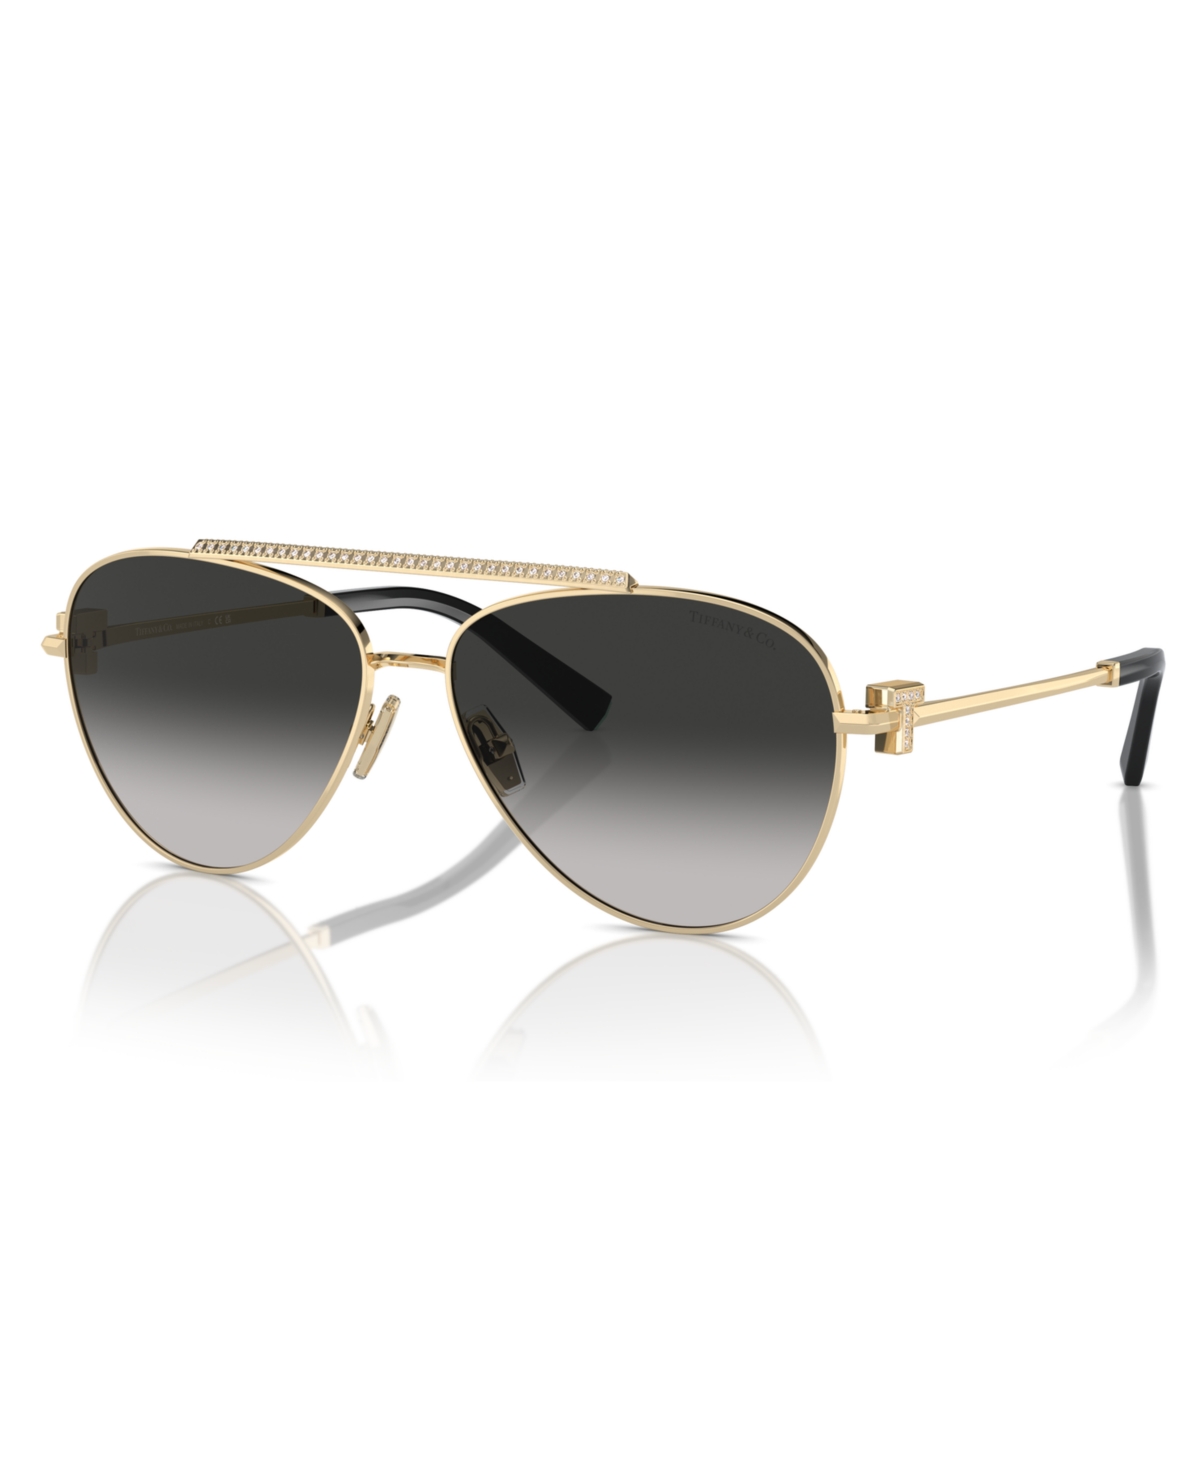 Tiffany & Co Women's Sunglasses, Tf3101b In Pale Gold